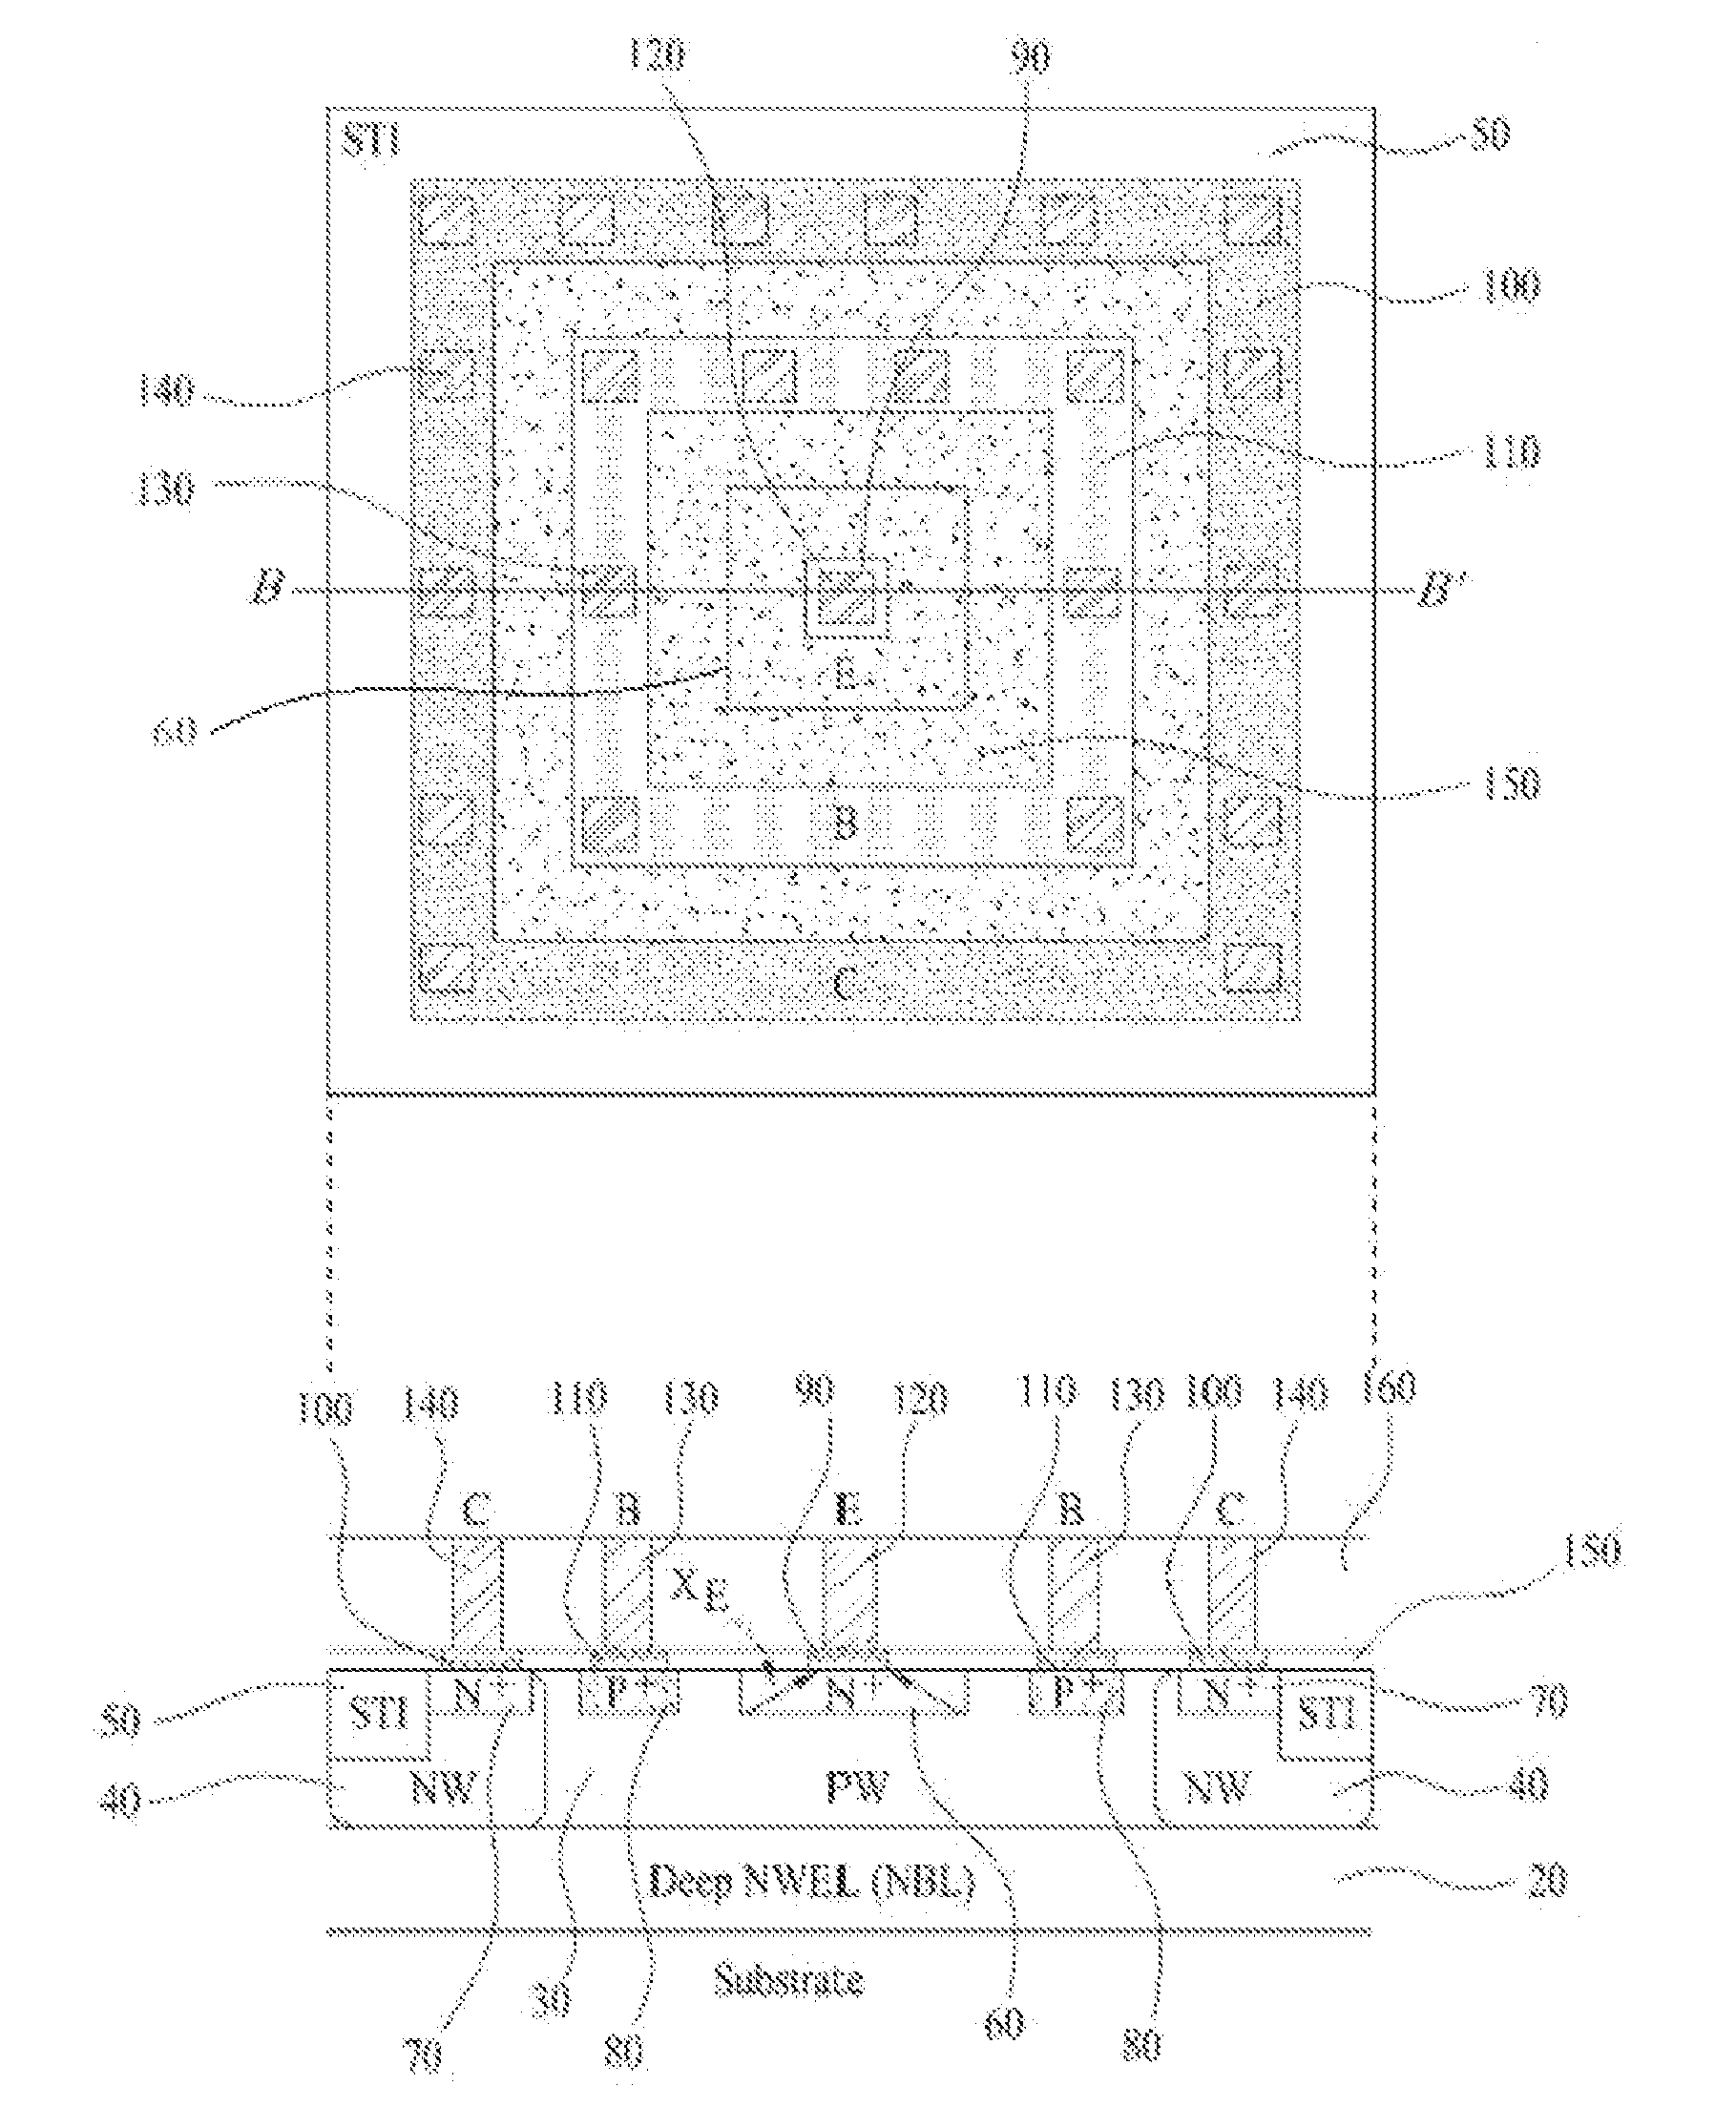 Bipolar Junction Transistor Based on CMOS Technology